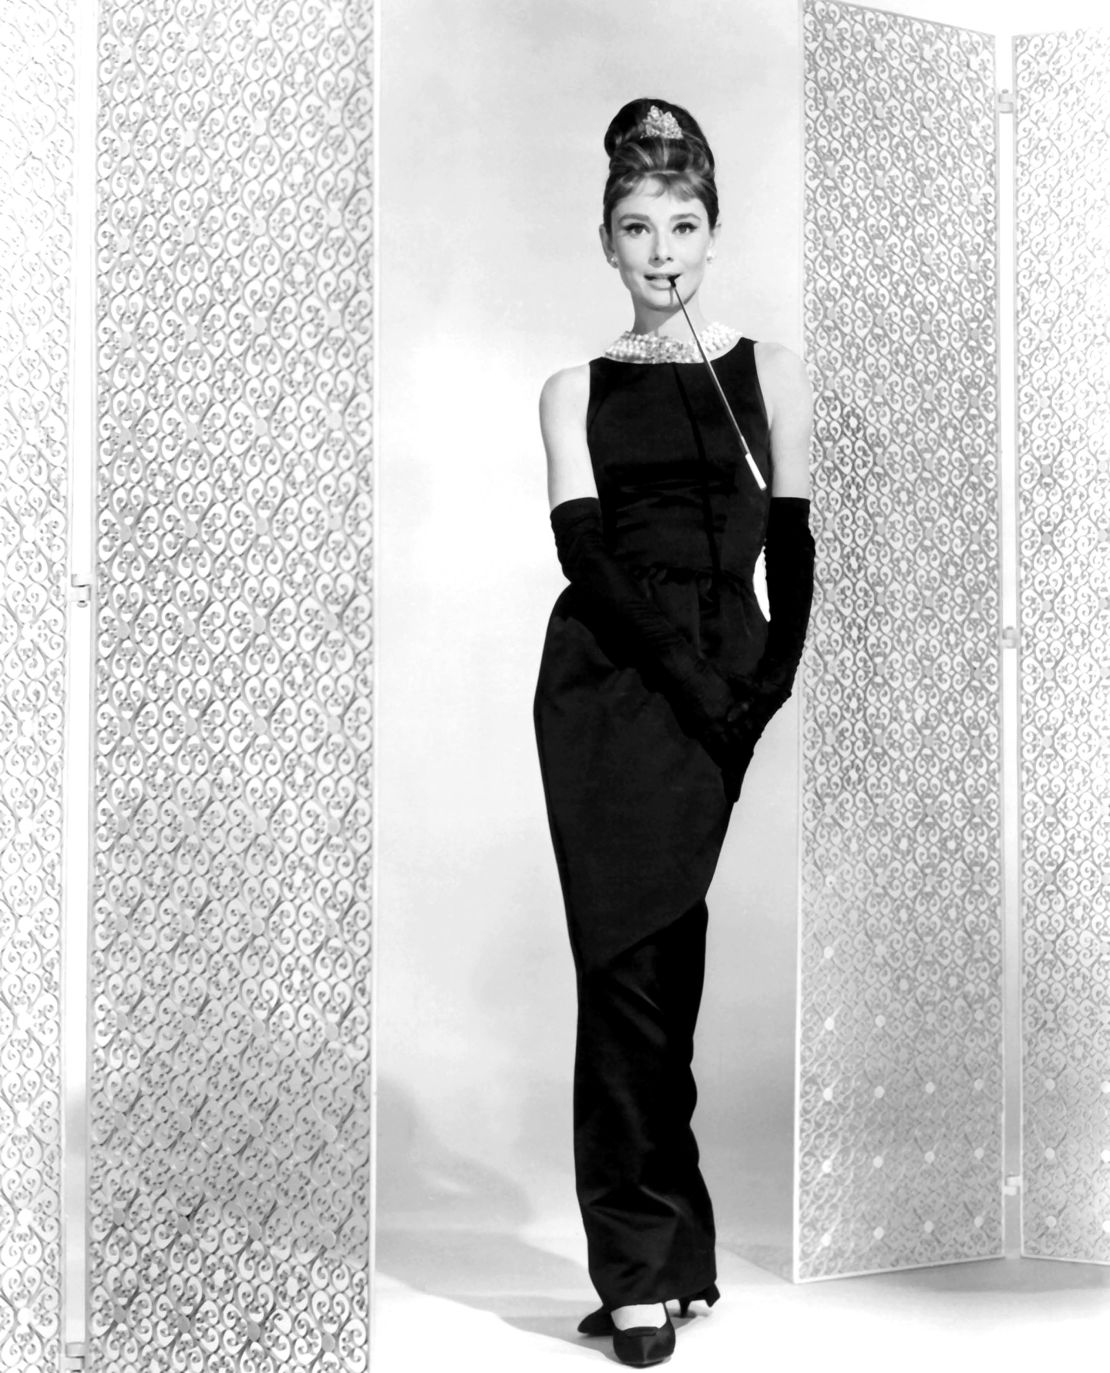 Remember when Audrey Hepburn defined elegance in a little black dress?